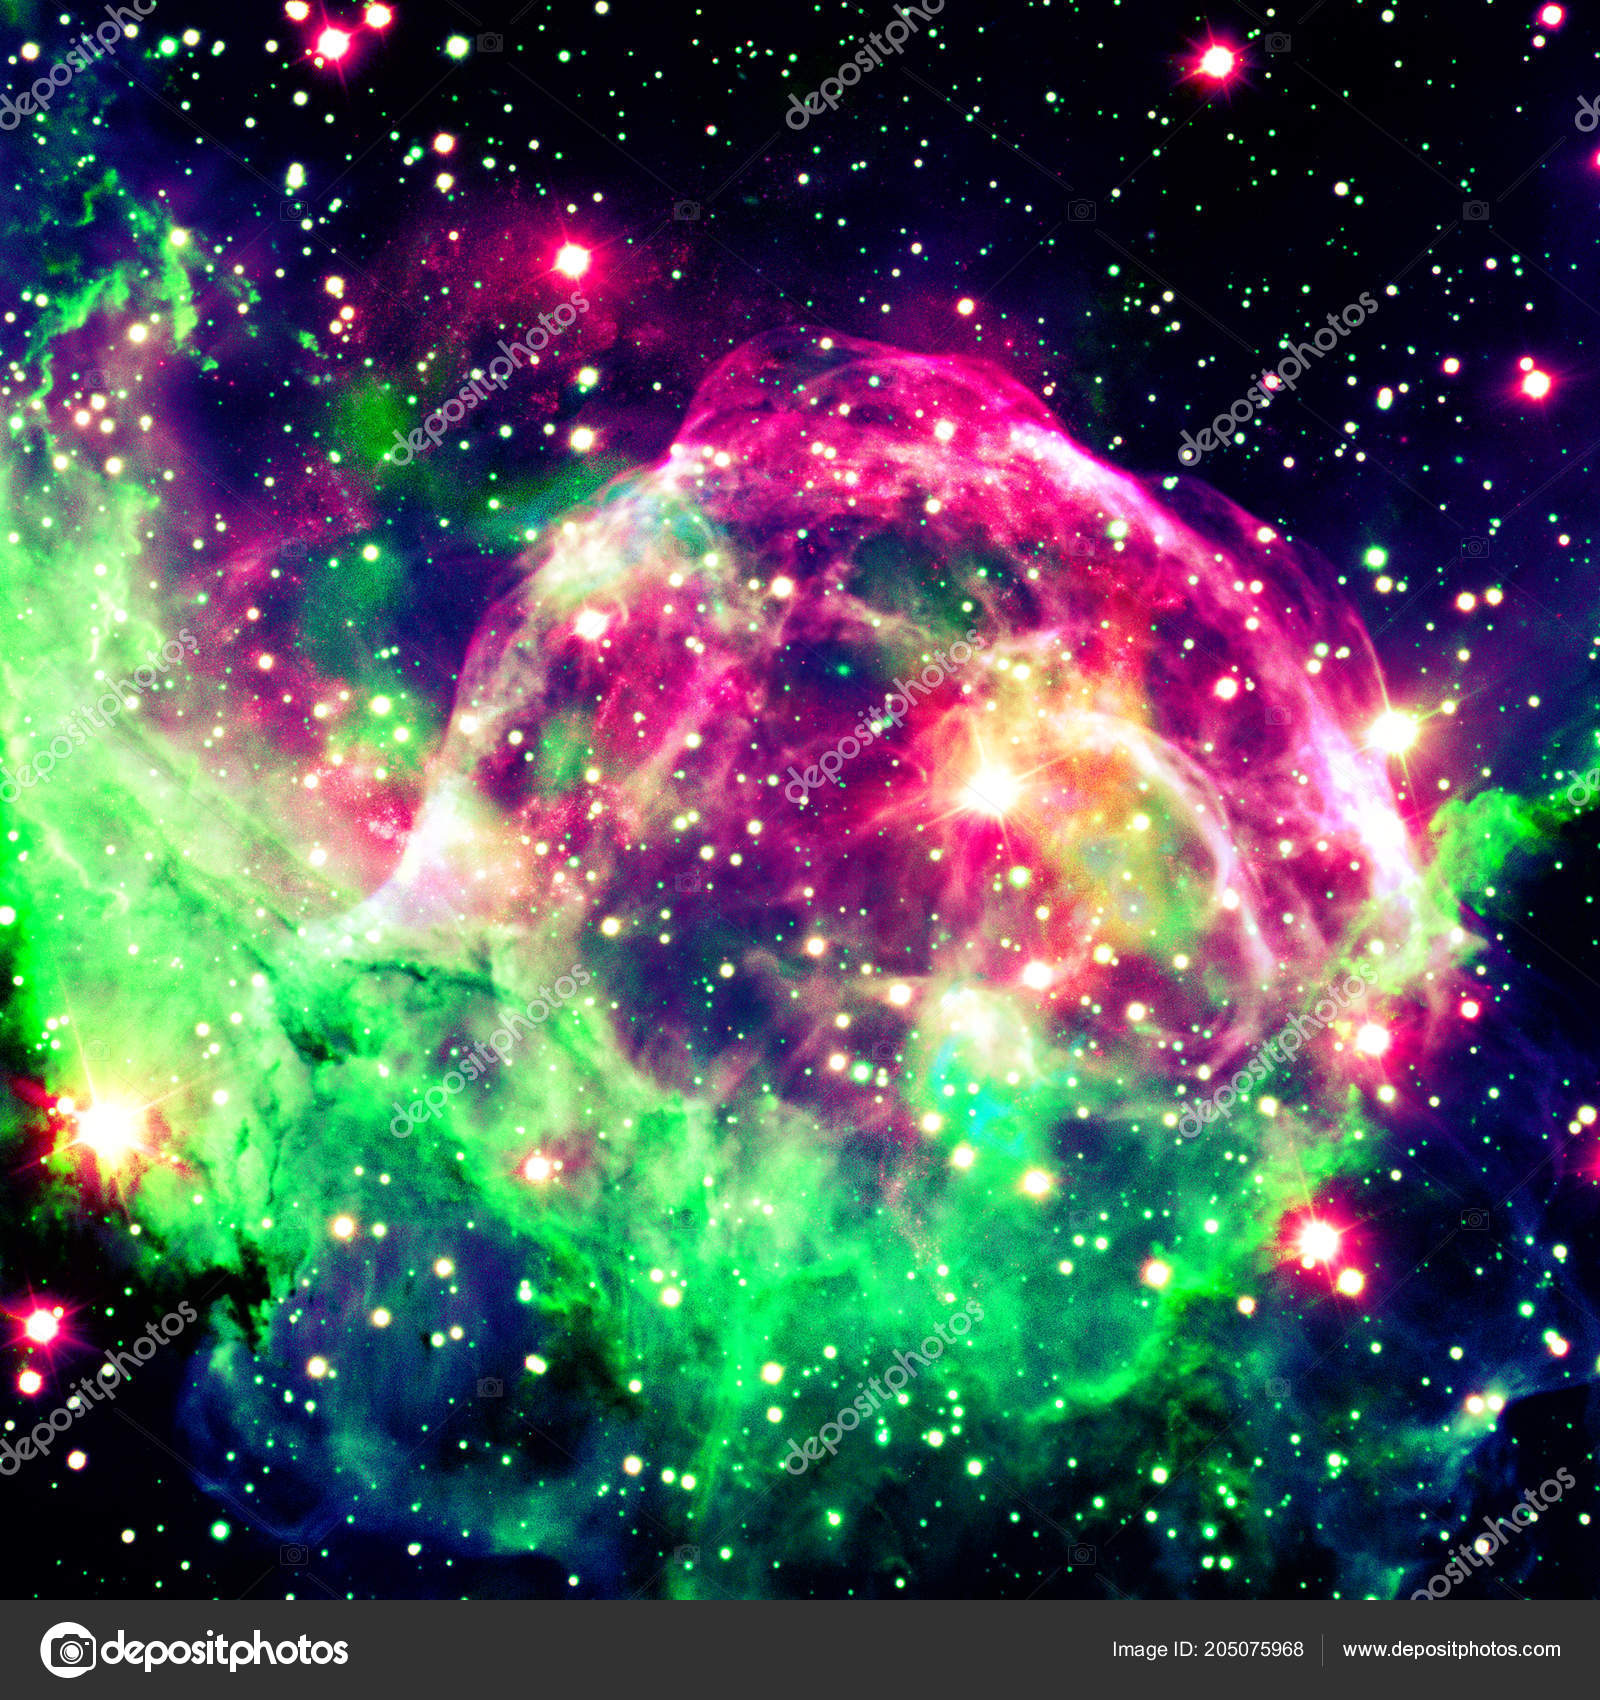 Galaxy Outer Space - 1600x1700 Wallpaper - teahub.io